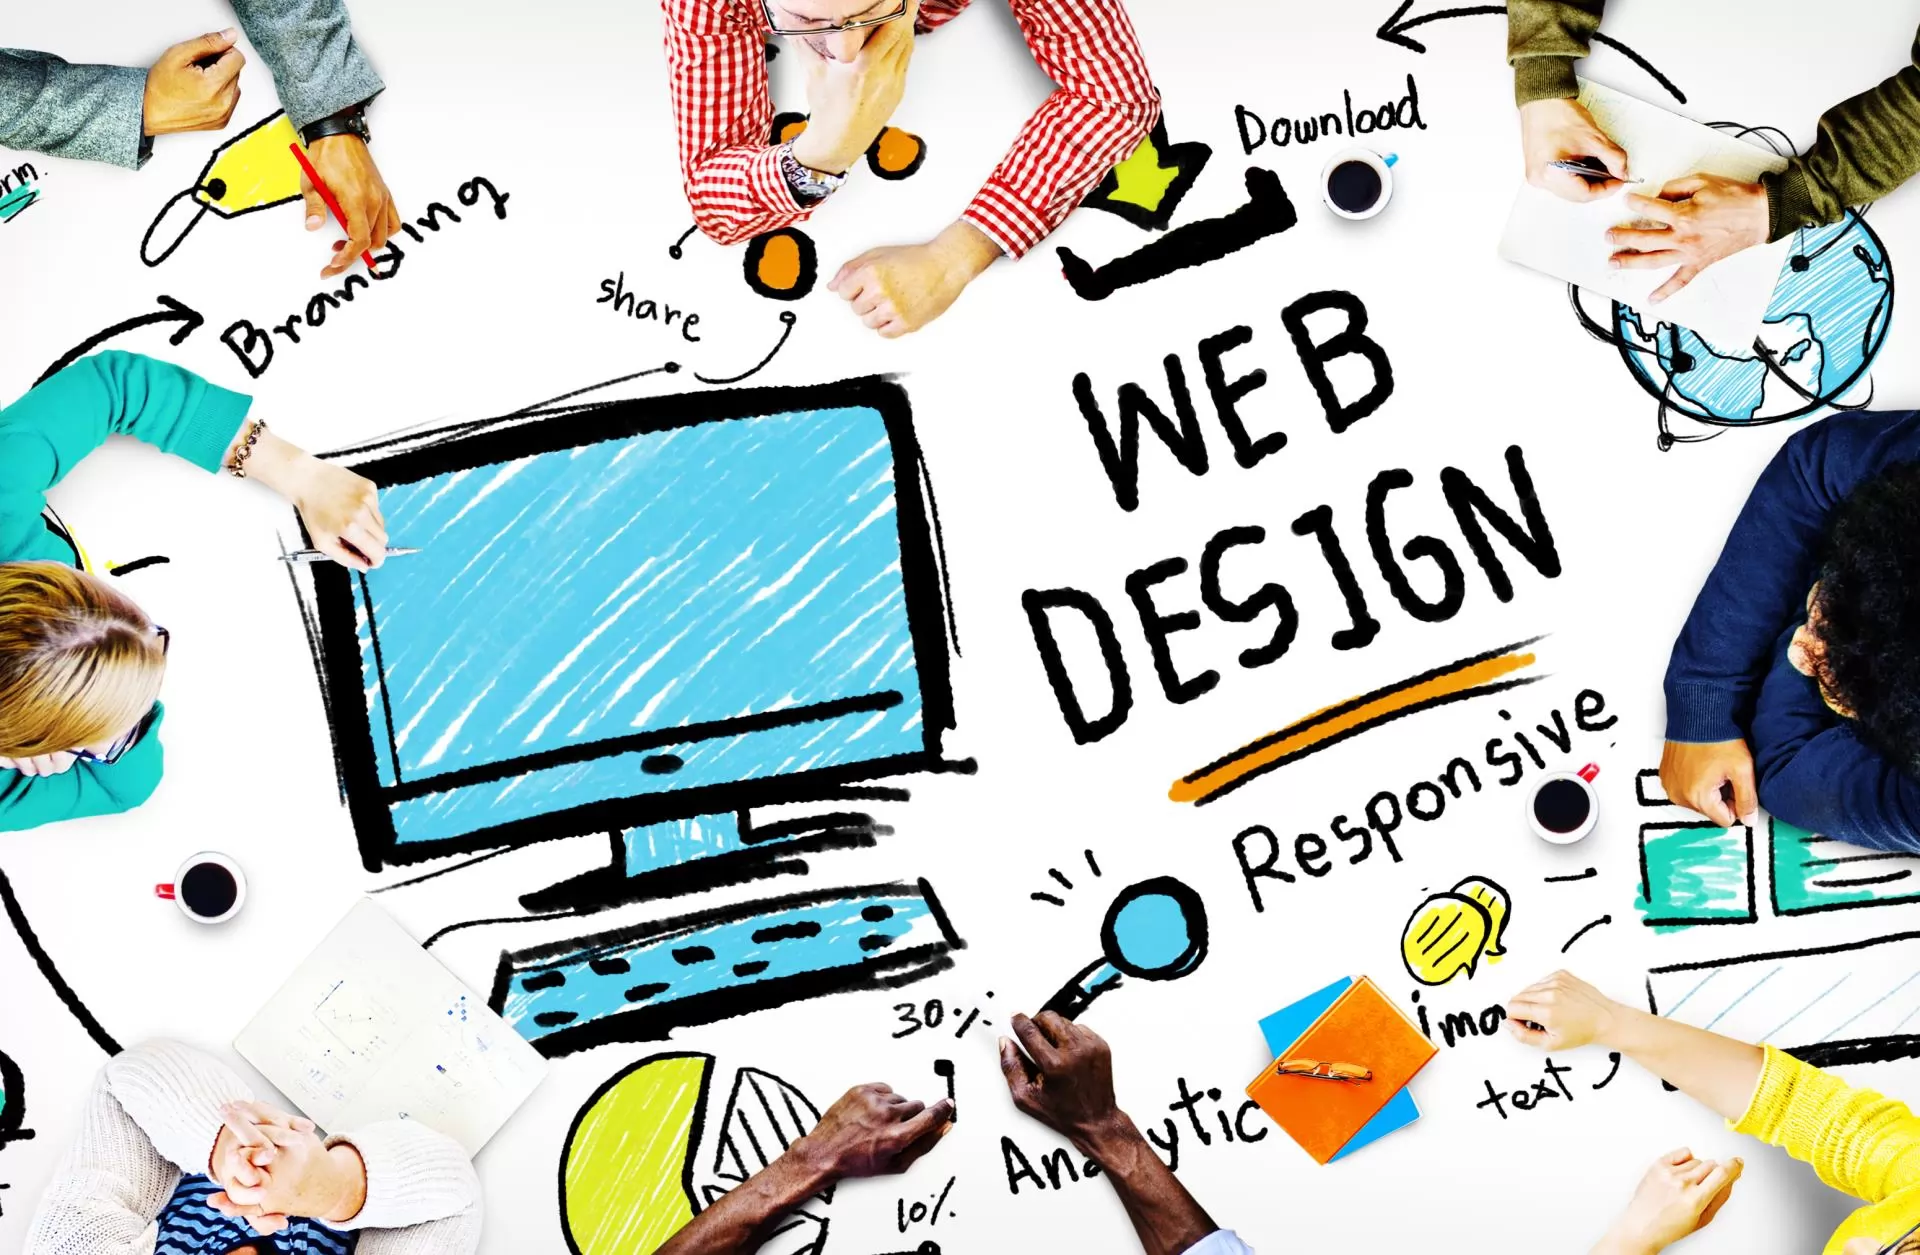 Calgary Web Design Company